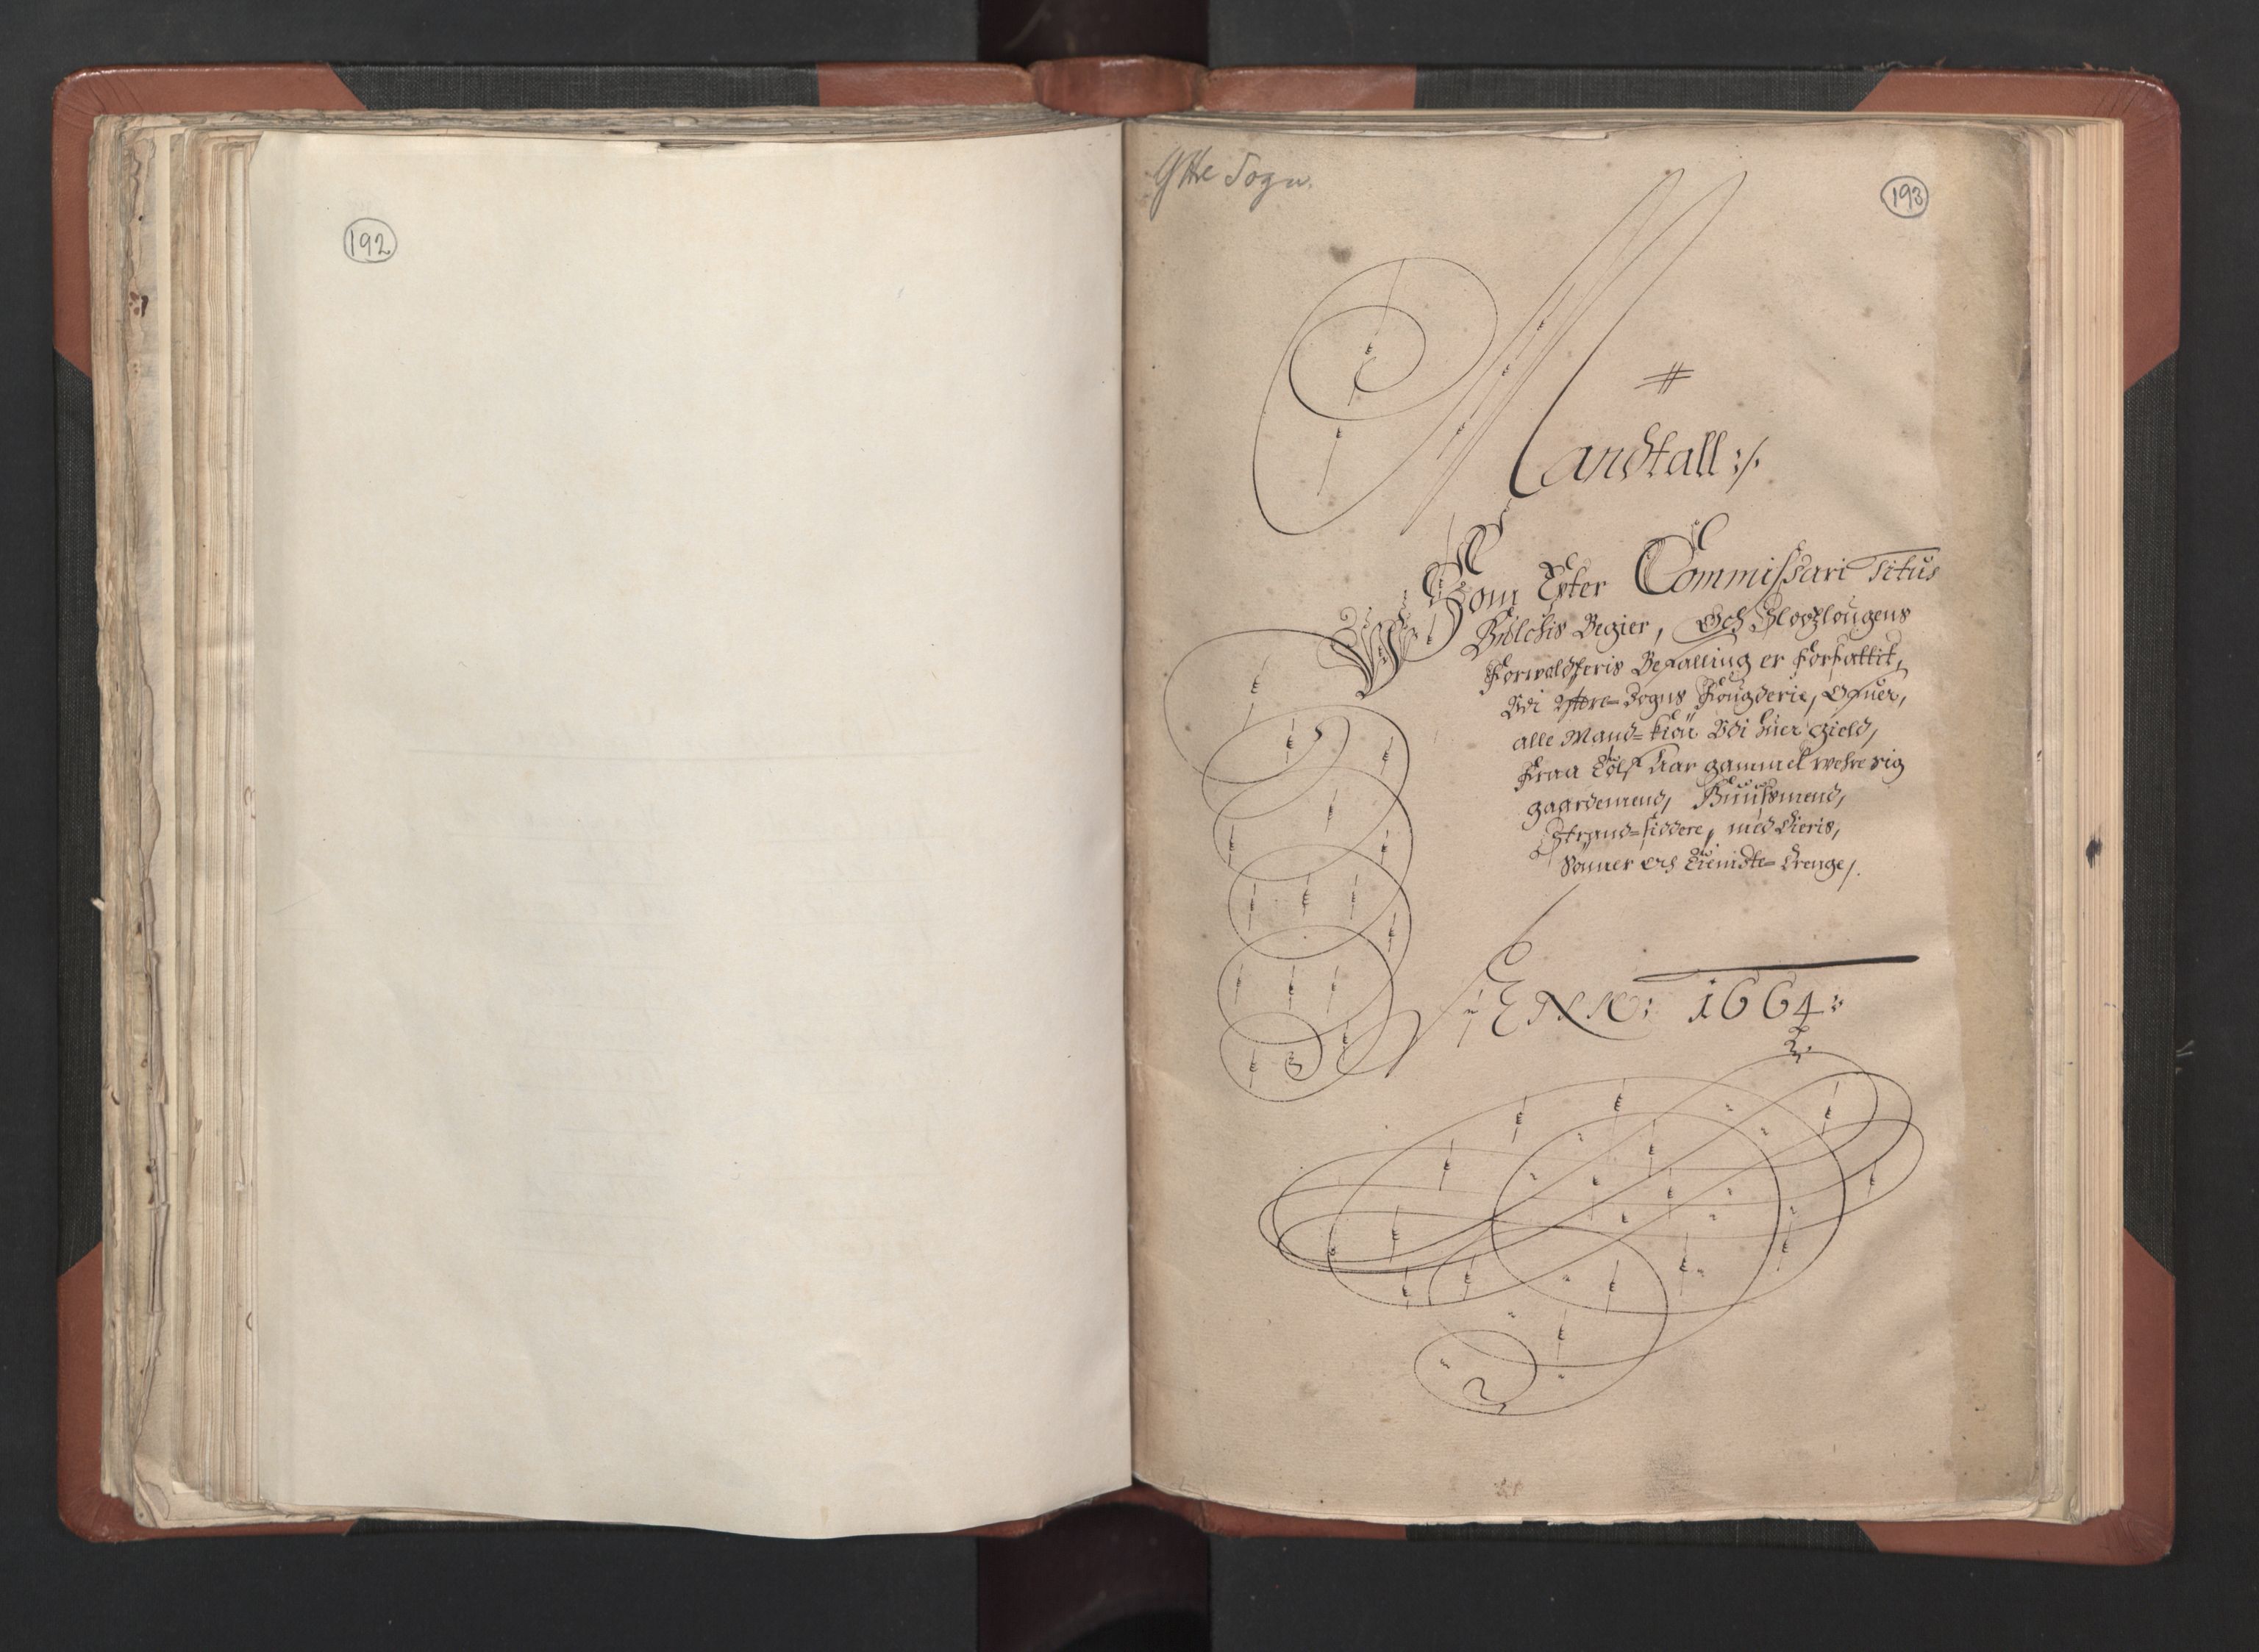 RA, Fogdenes og sorenskrivernes manntall 1664-1666, nr. 14: Hardanger len, Ytre Sogn fogderi og Indre Sogn fogderi, 1664-1665, s. 192-193